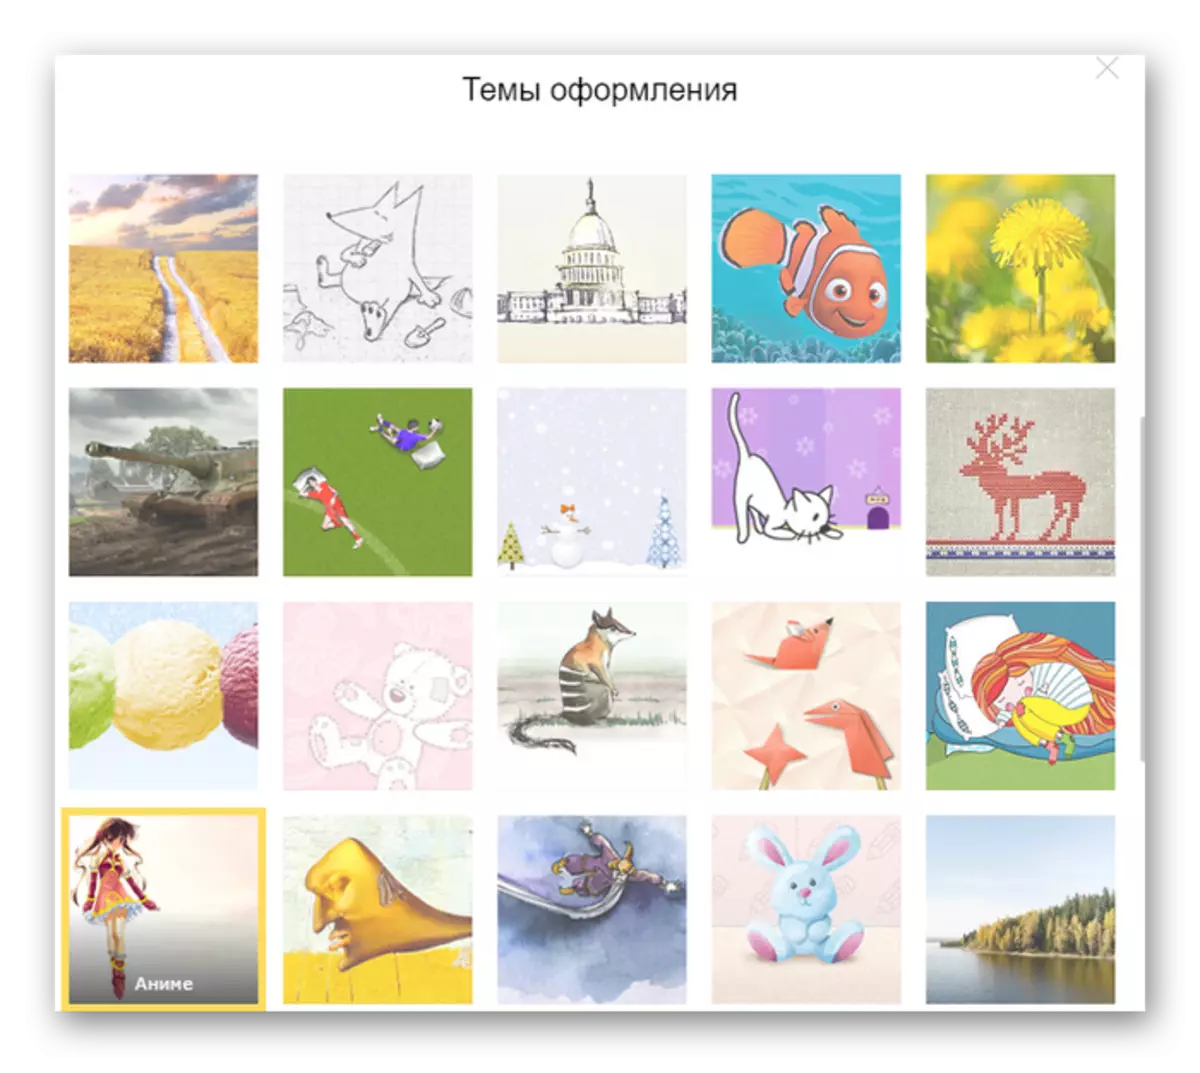 Tema's foar Yandex-post